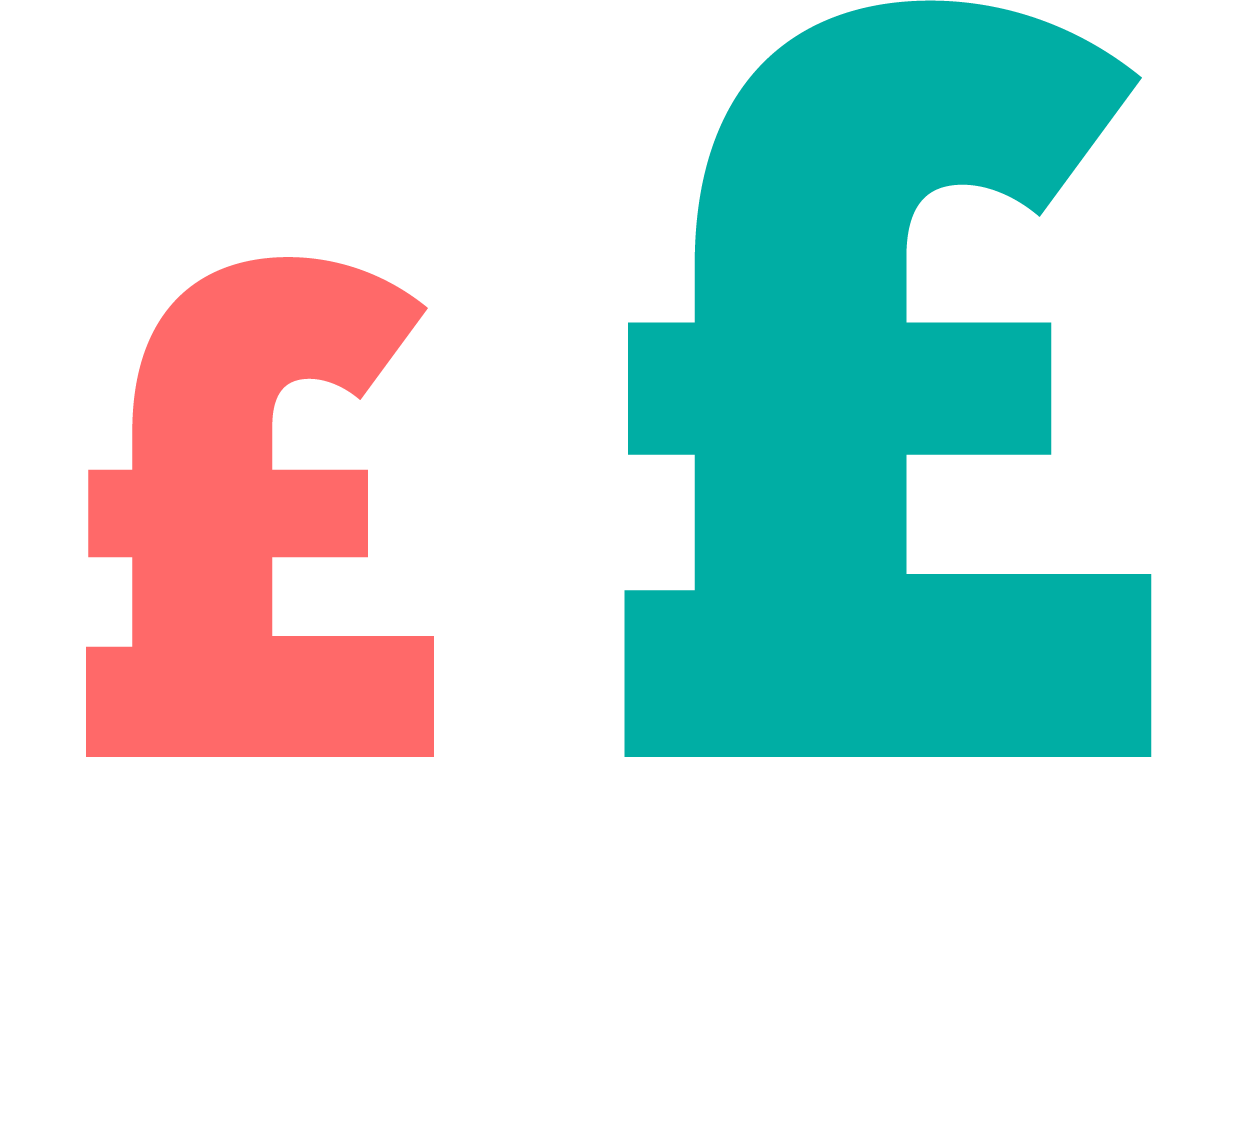 22% Increase in Revenue